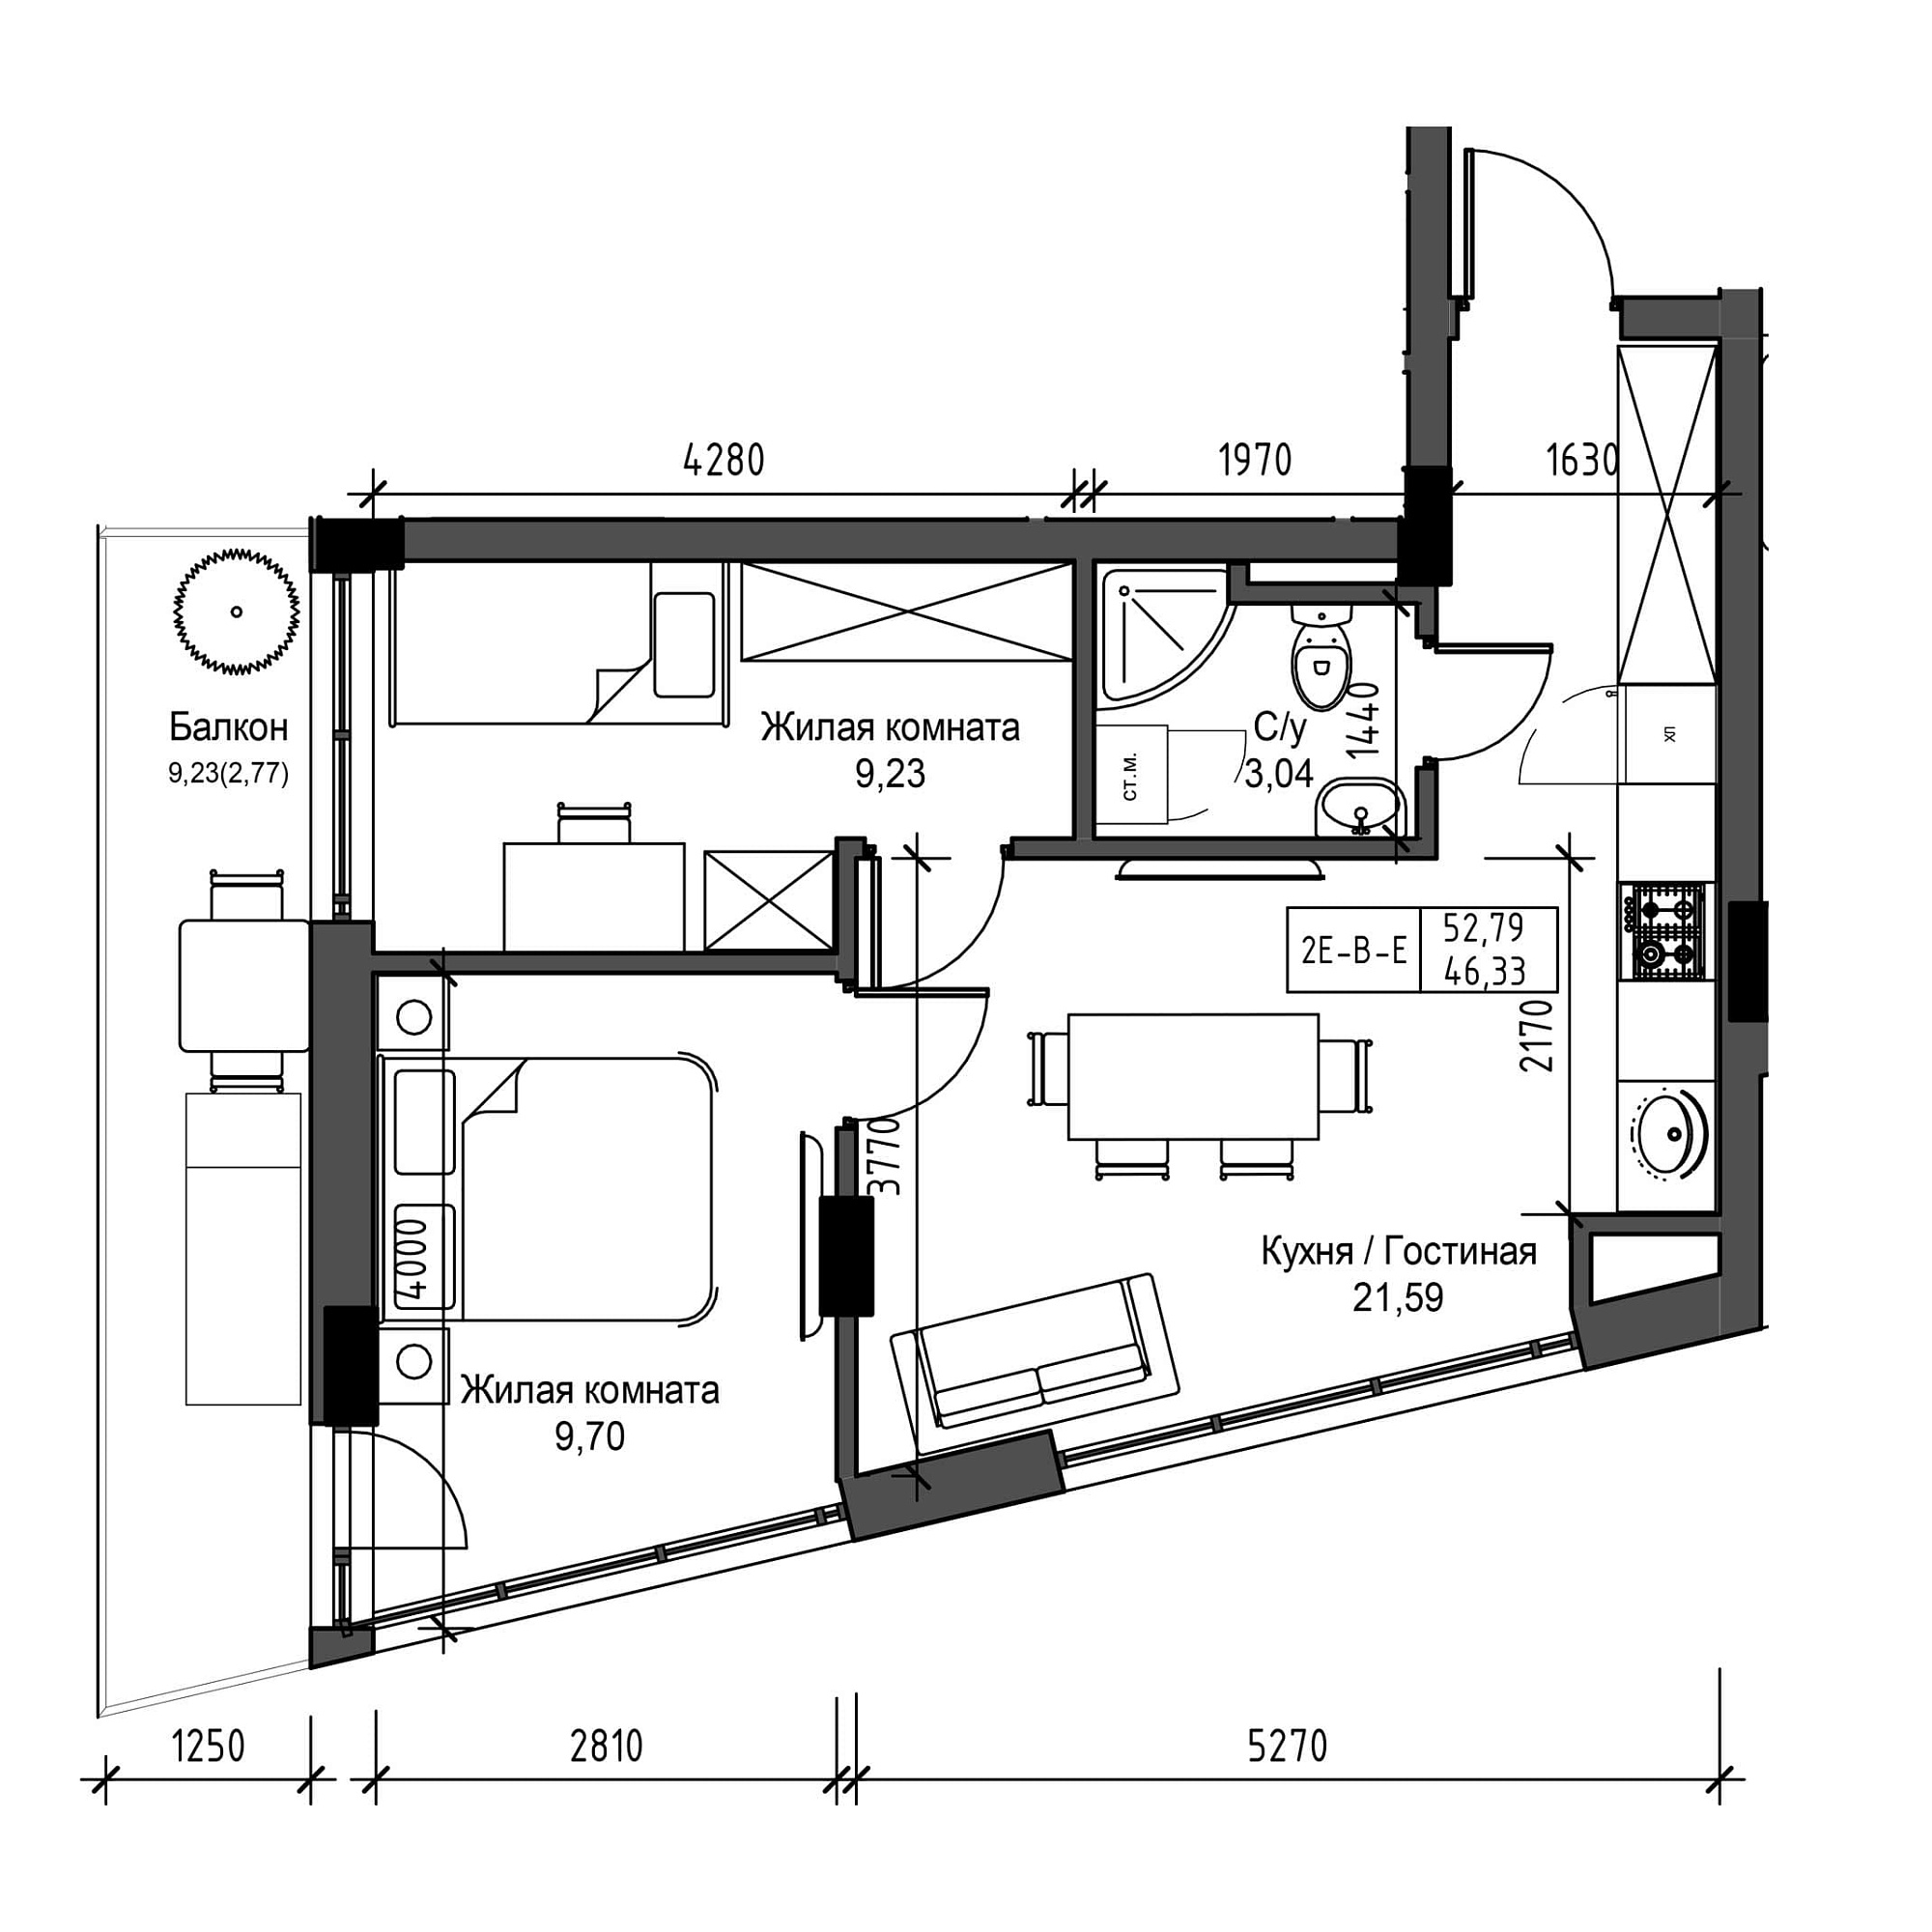 Planning 2-rm flats area 46.33m2, UM-001-05/0009.